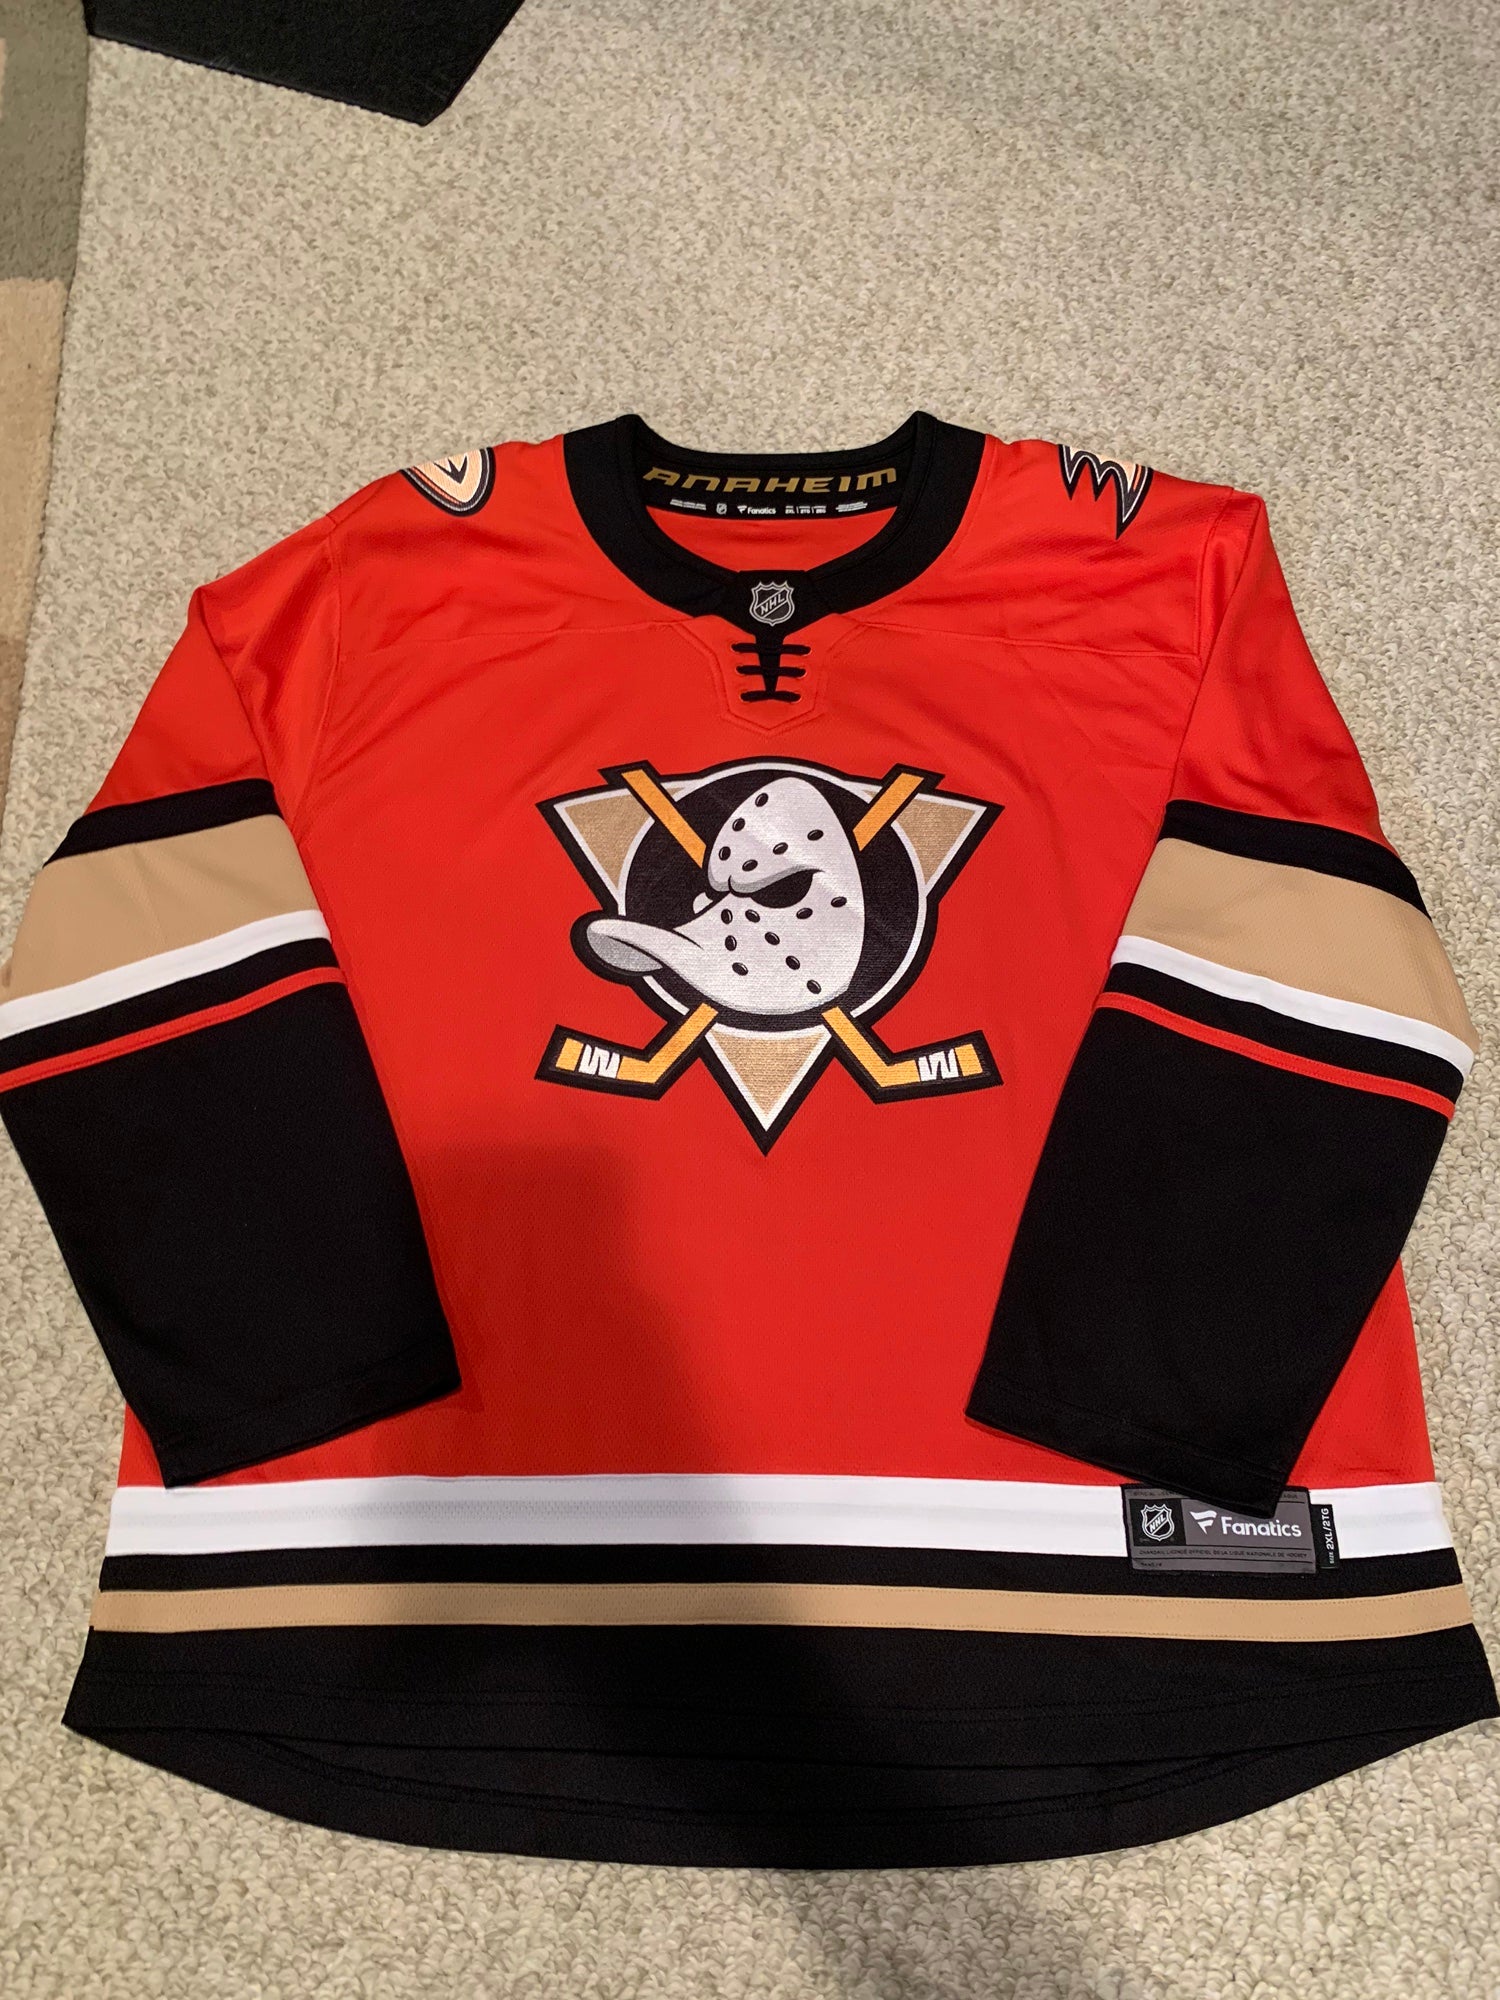 My '02 Team-signed Mighty Ducks Jersey. : r/hockeyjerseys